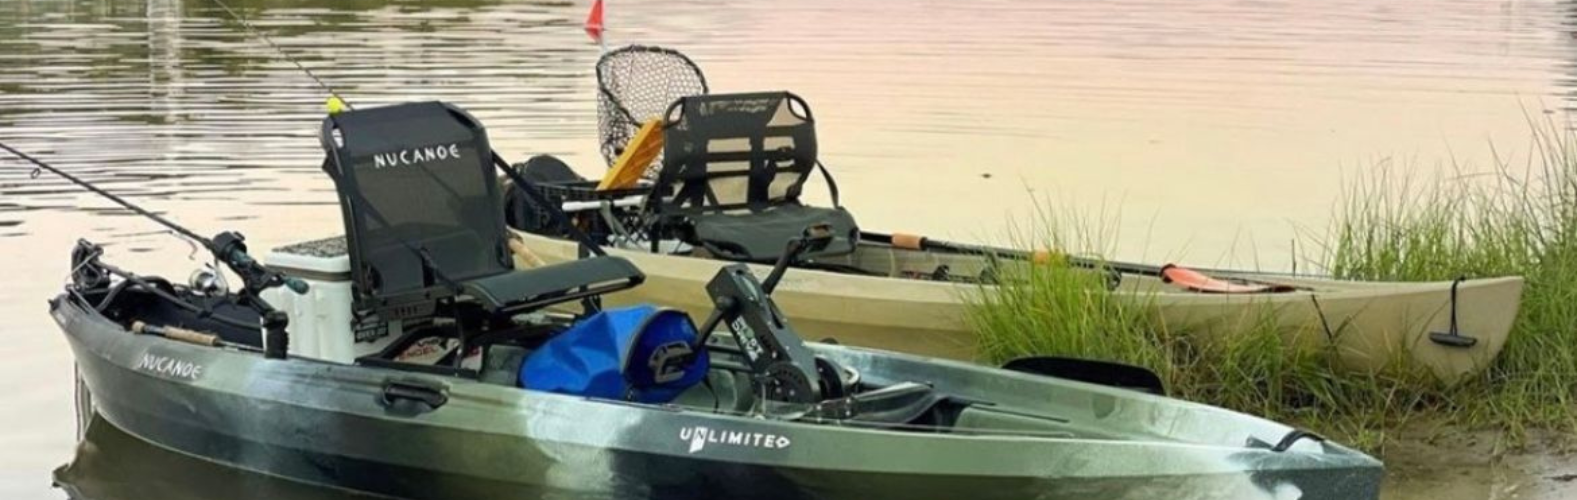 What Makes a Good Fishing Kayak?